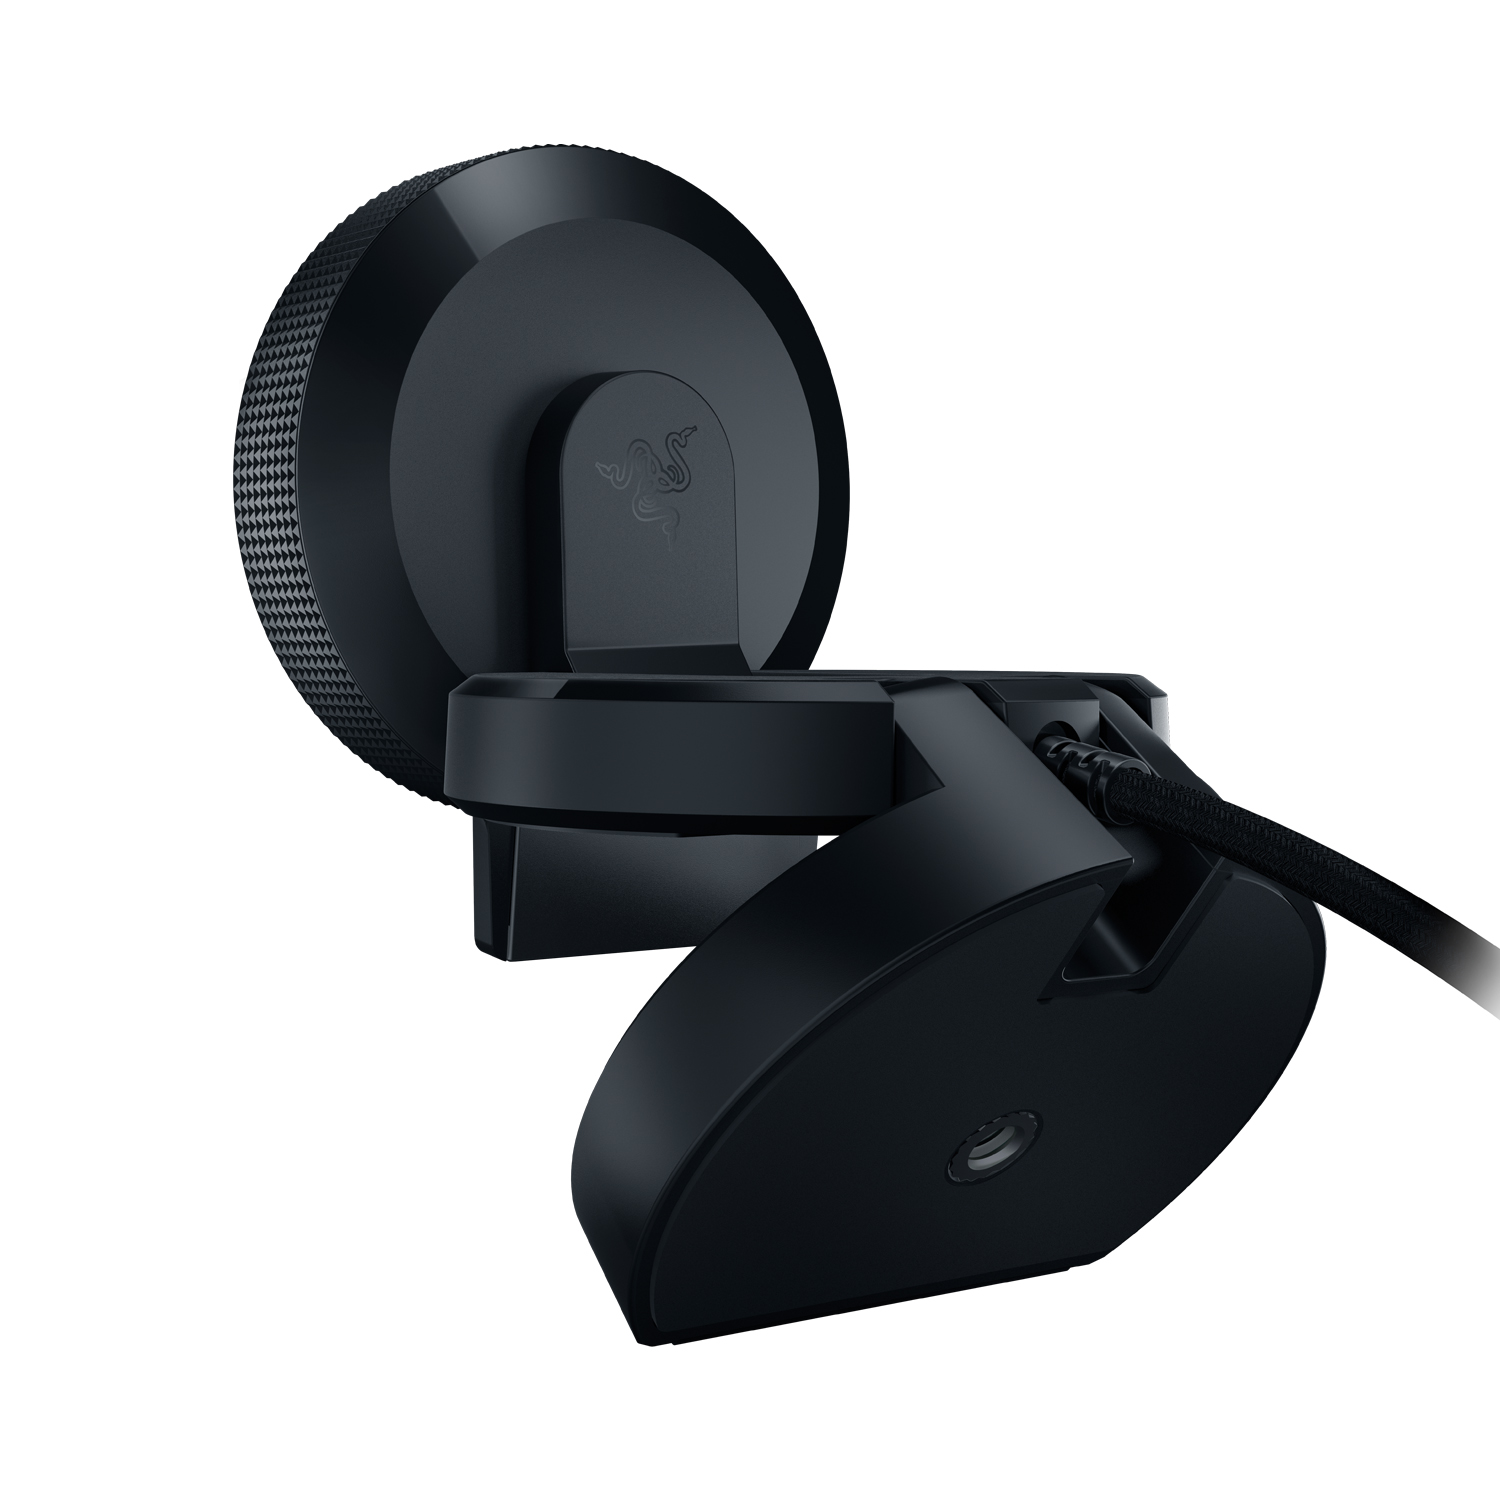 Razer Kiyo Streaming Webcam, Full HD, Auto Focus, Ring Light with Adjustable Brightness, Black - image 8 of 10